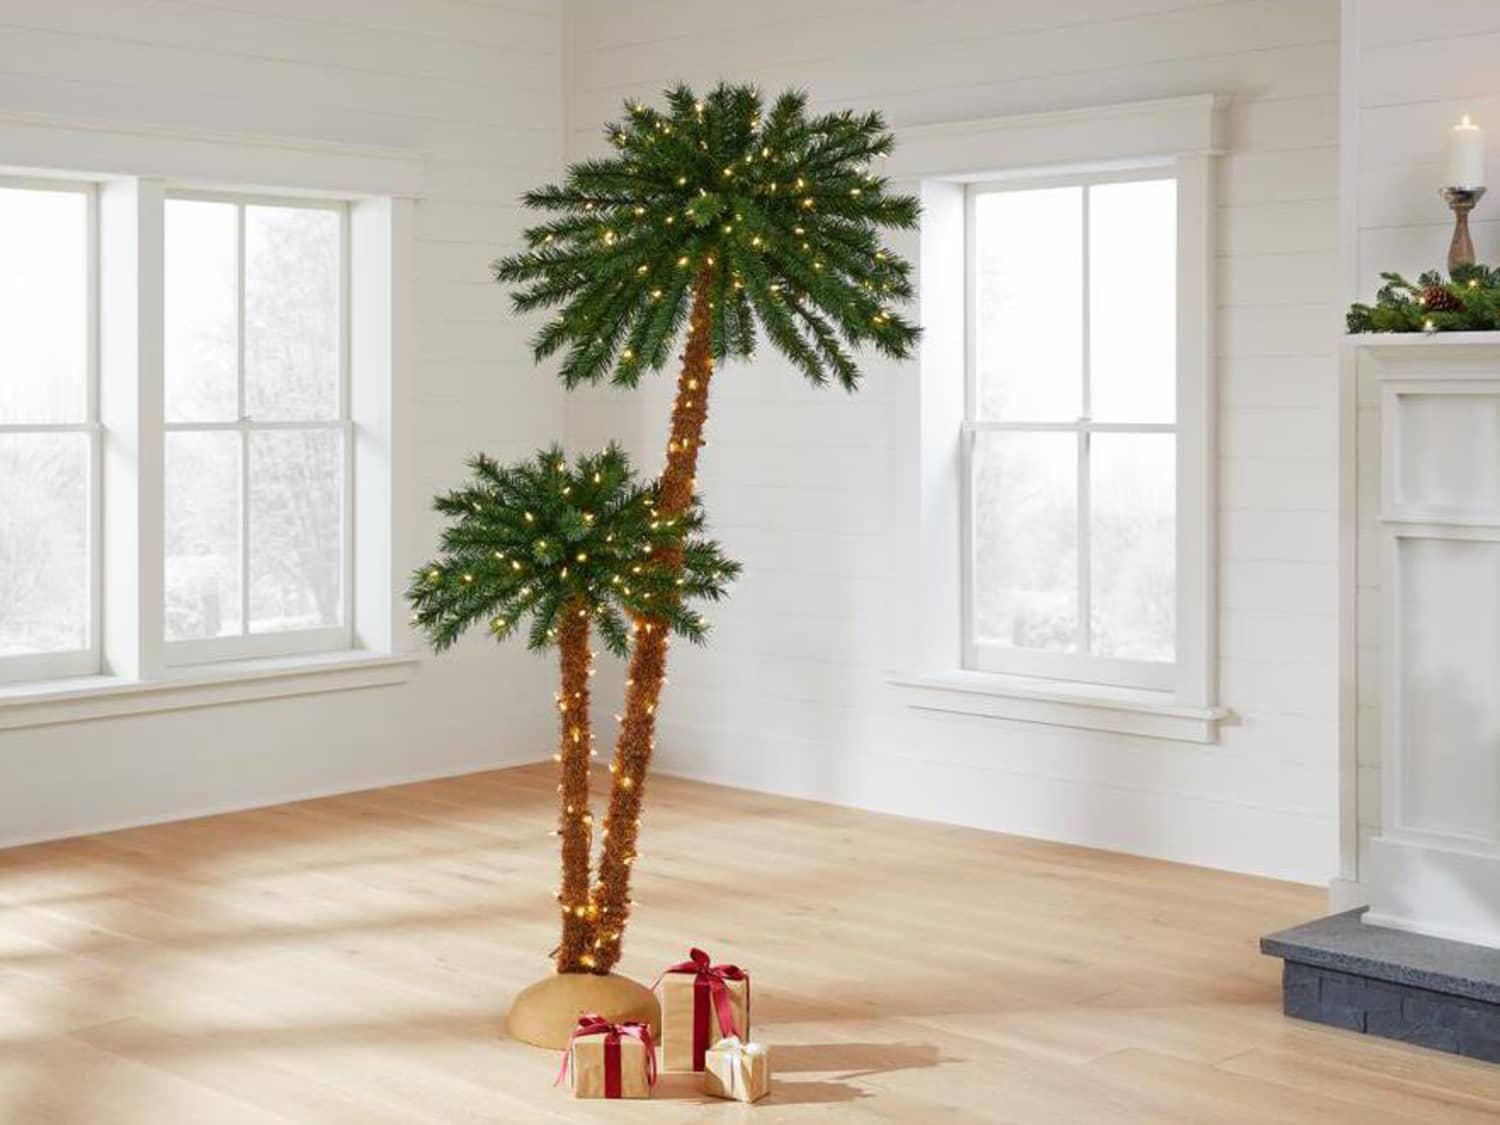 3. "Christmas Palm Tree Nail Art Ideas" - wide 4